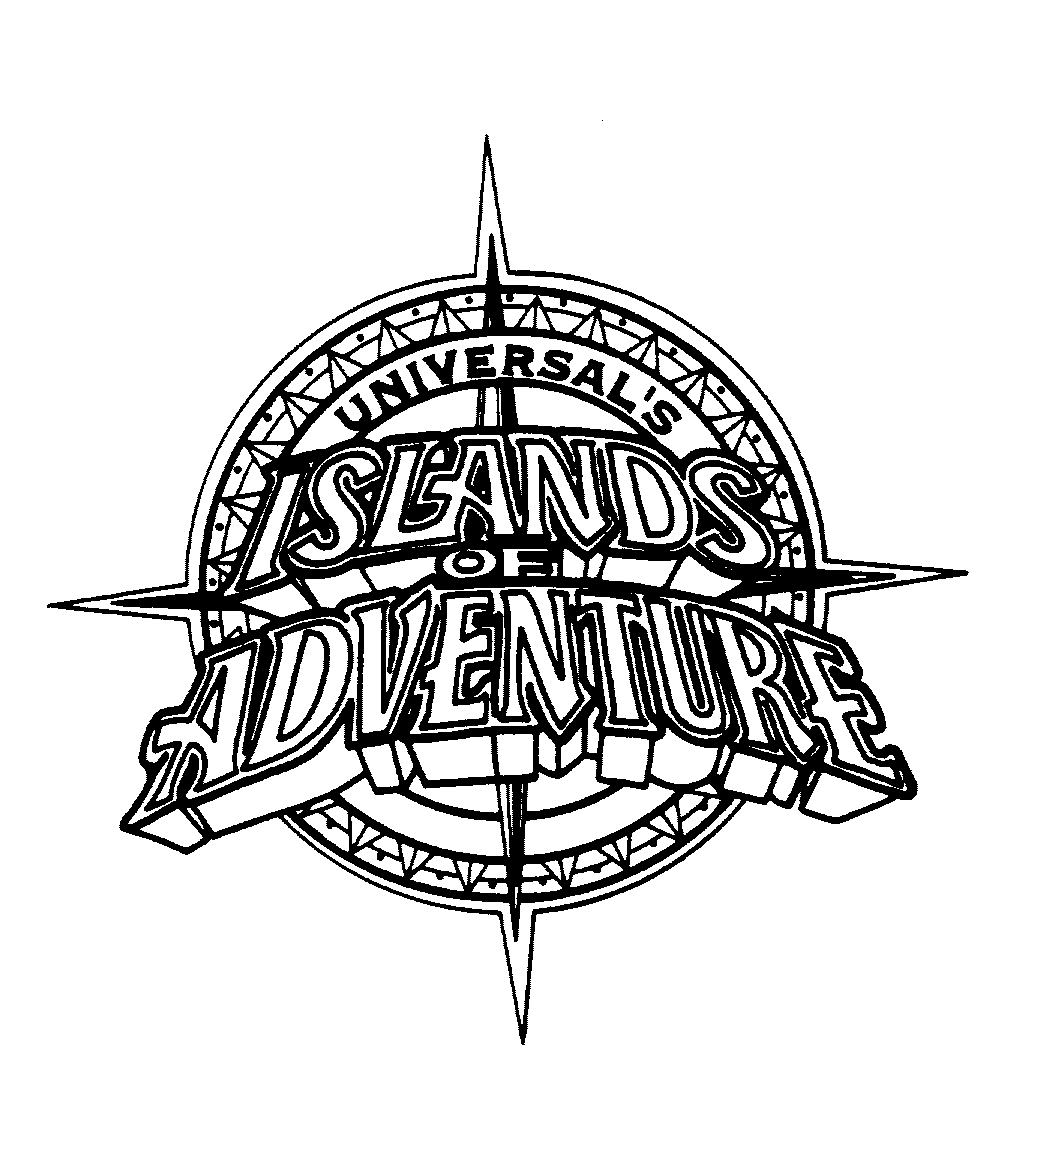 Trademark Logo UNIVERSAL'S ISLANDS OF ADVENTURE